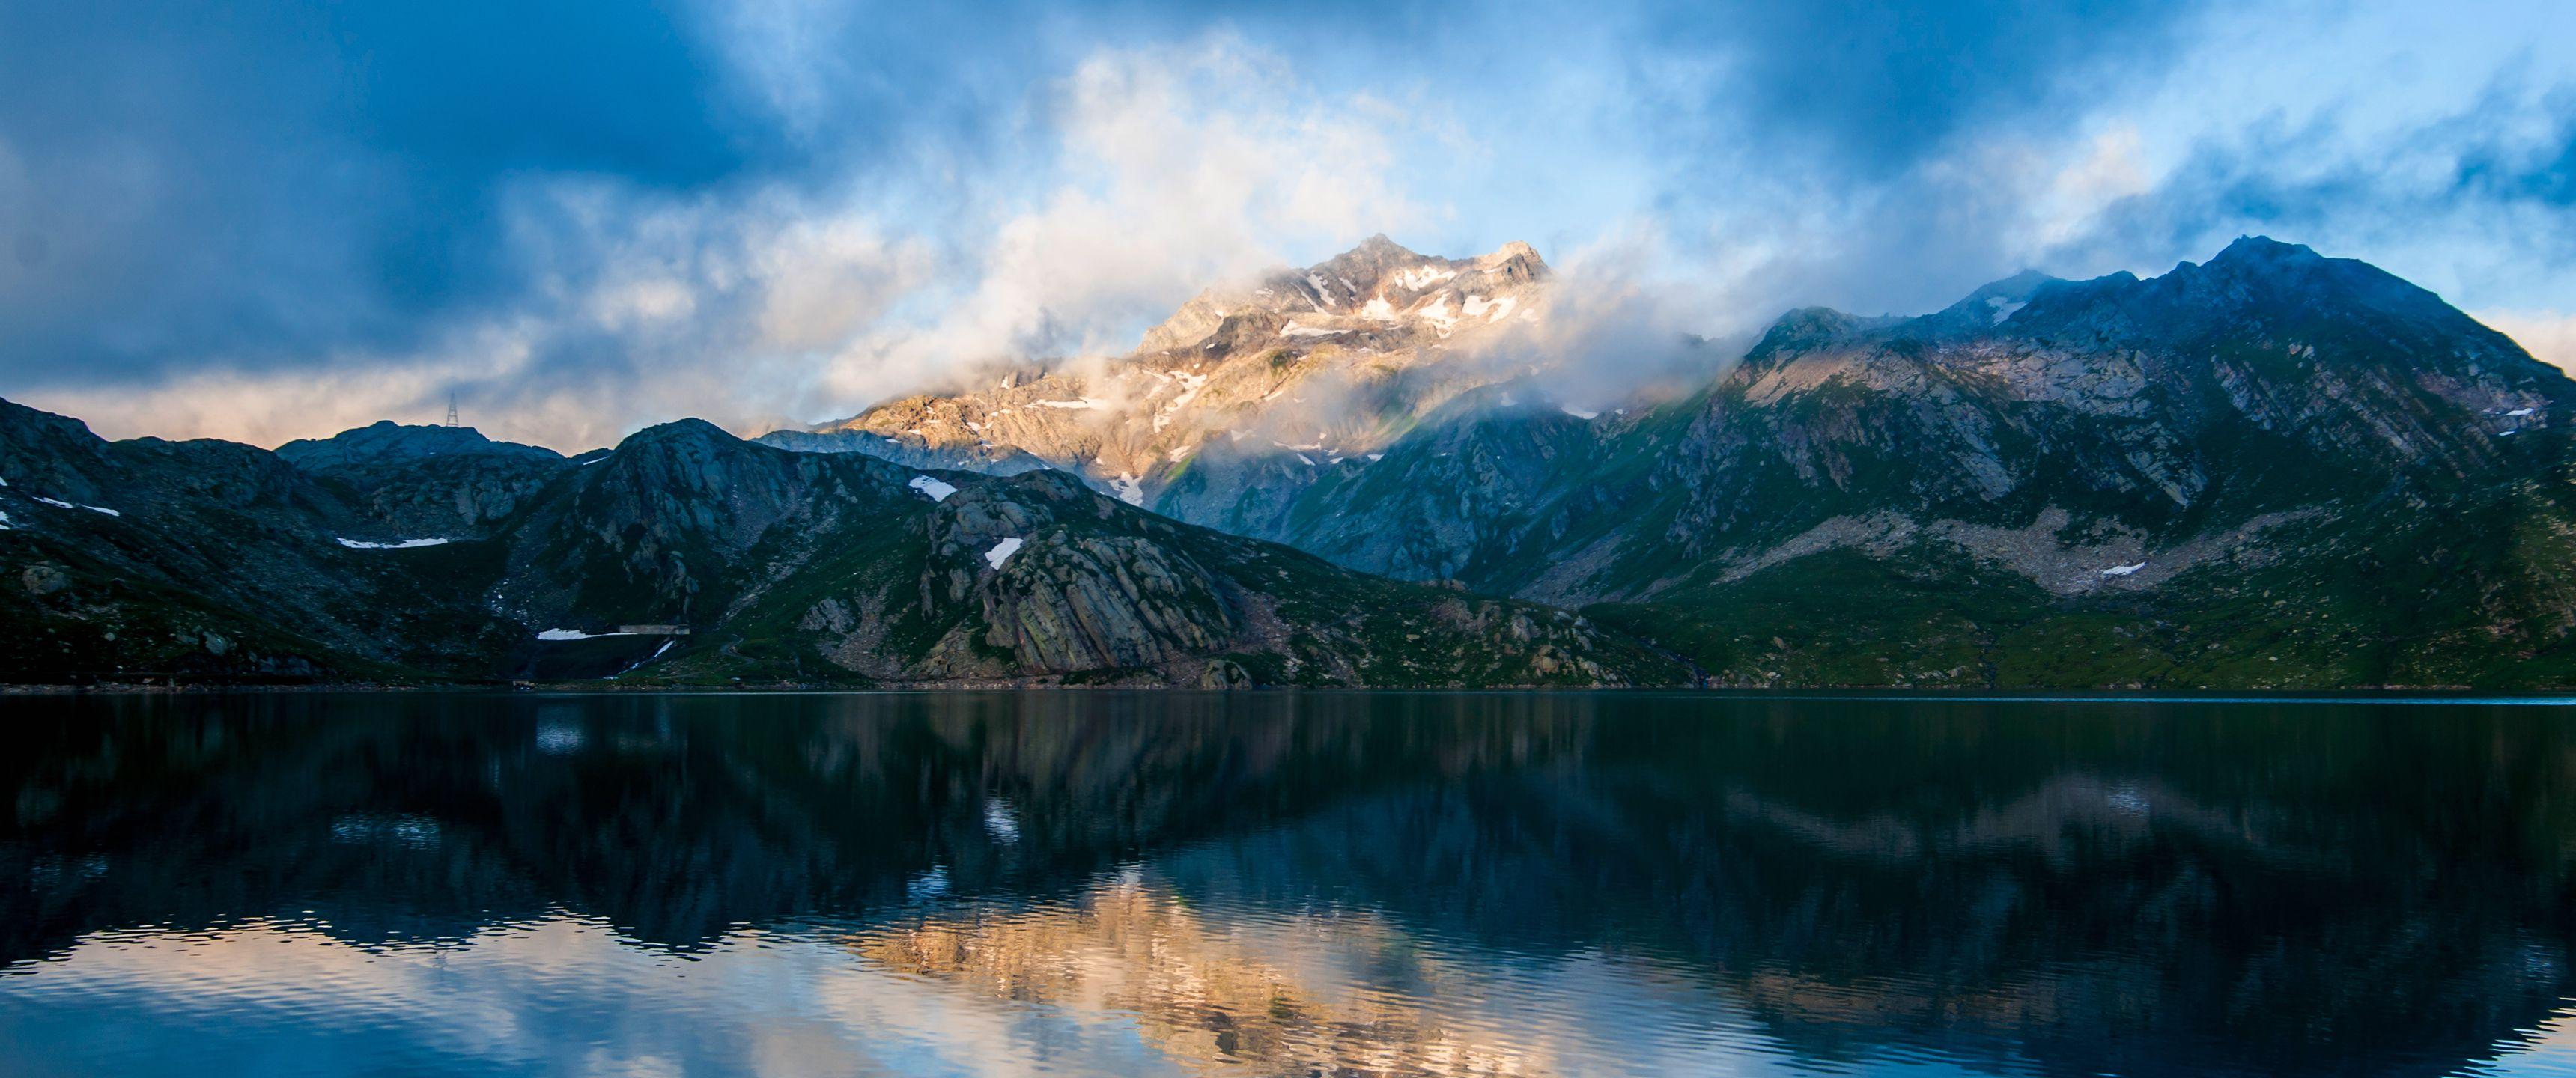 21:9 Ultrawide HD Wallpaper (3440x1440) Mountain. Free high resolution photo, Landscape photography, Lake photo